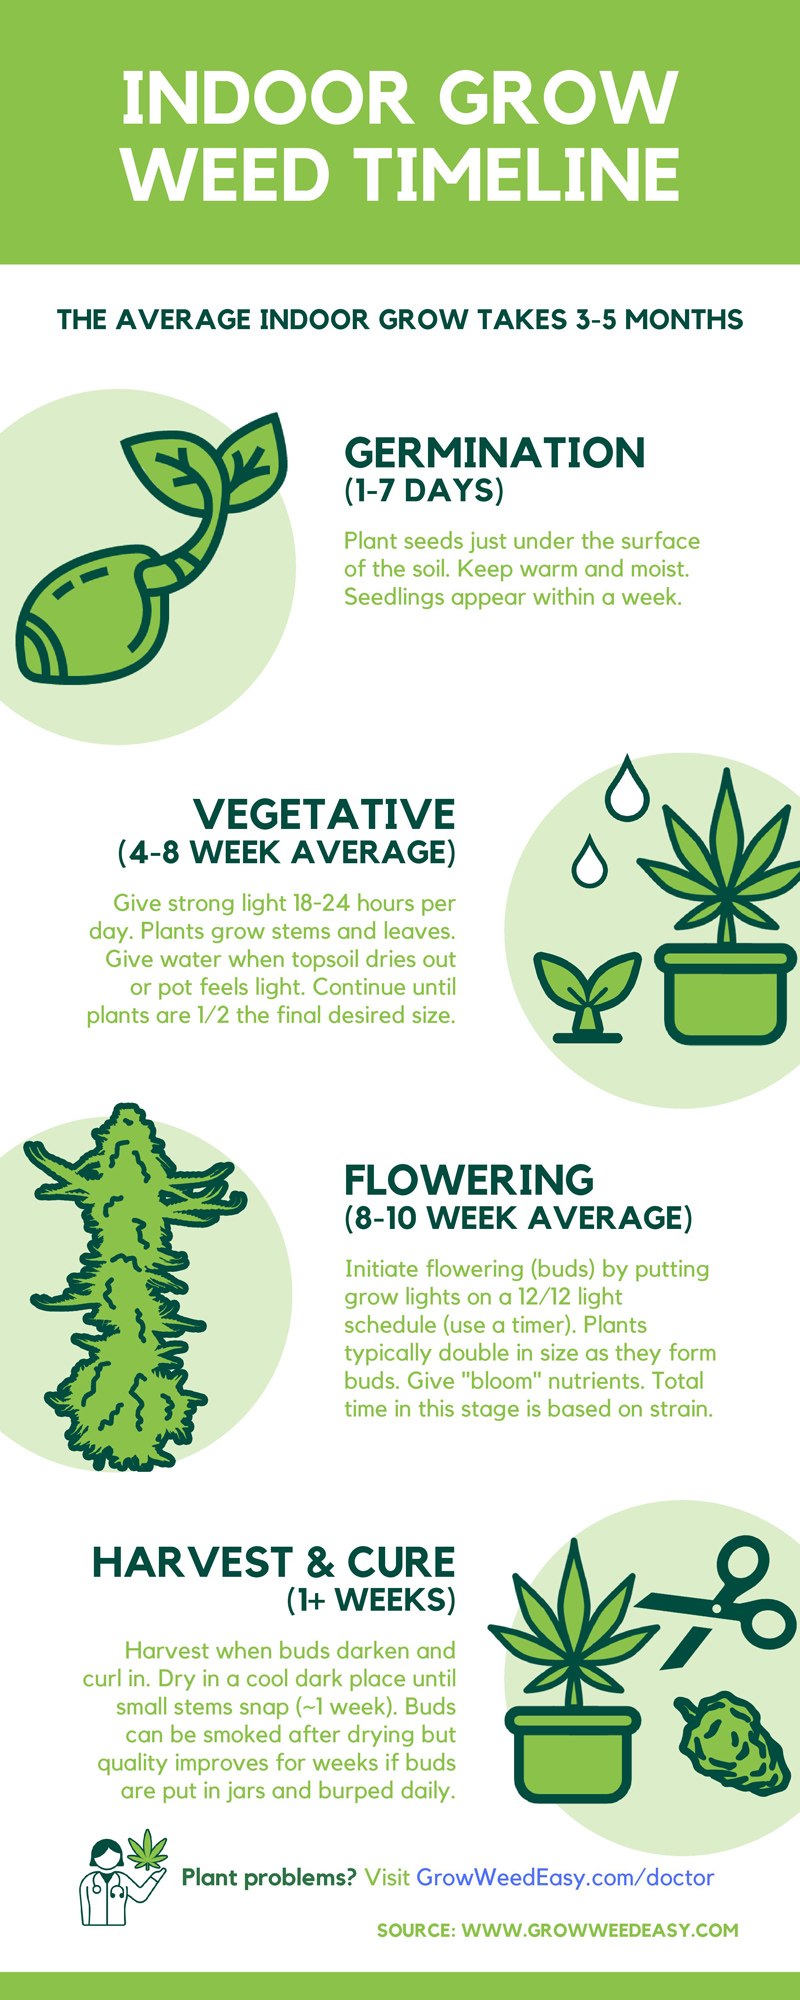 https://www.growweedeasy.com/wp-content/uploads/2020/12/Weed-Growing-Timeline-Infographic.jpg